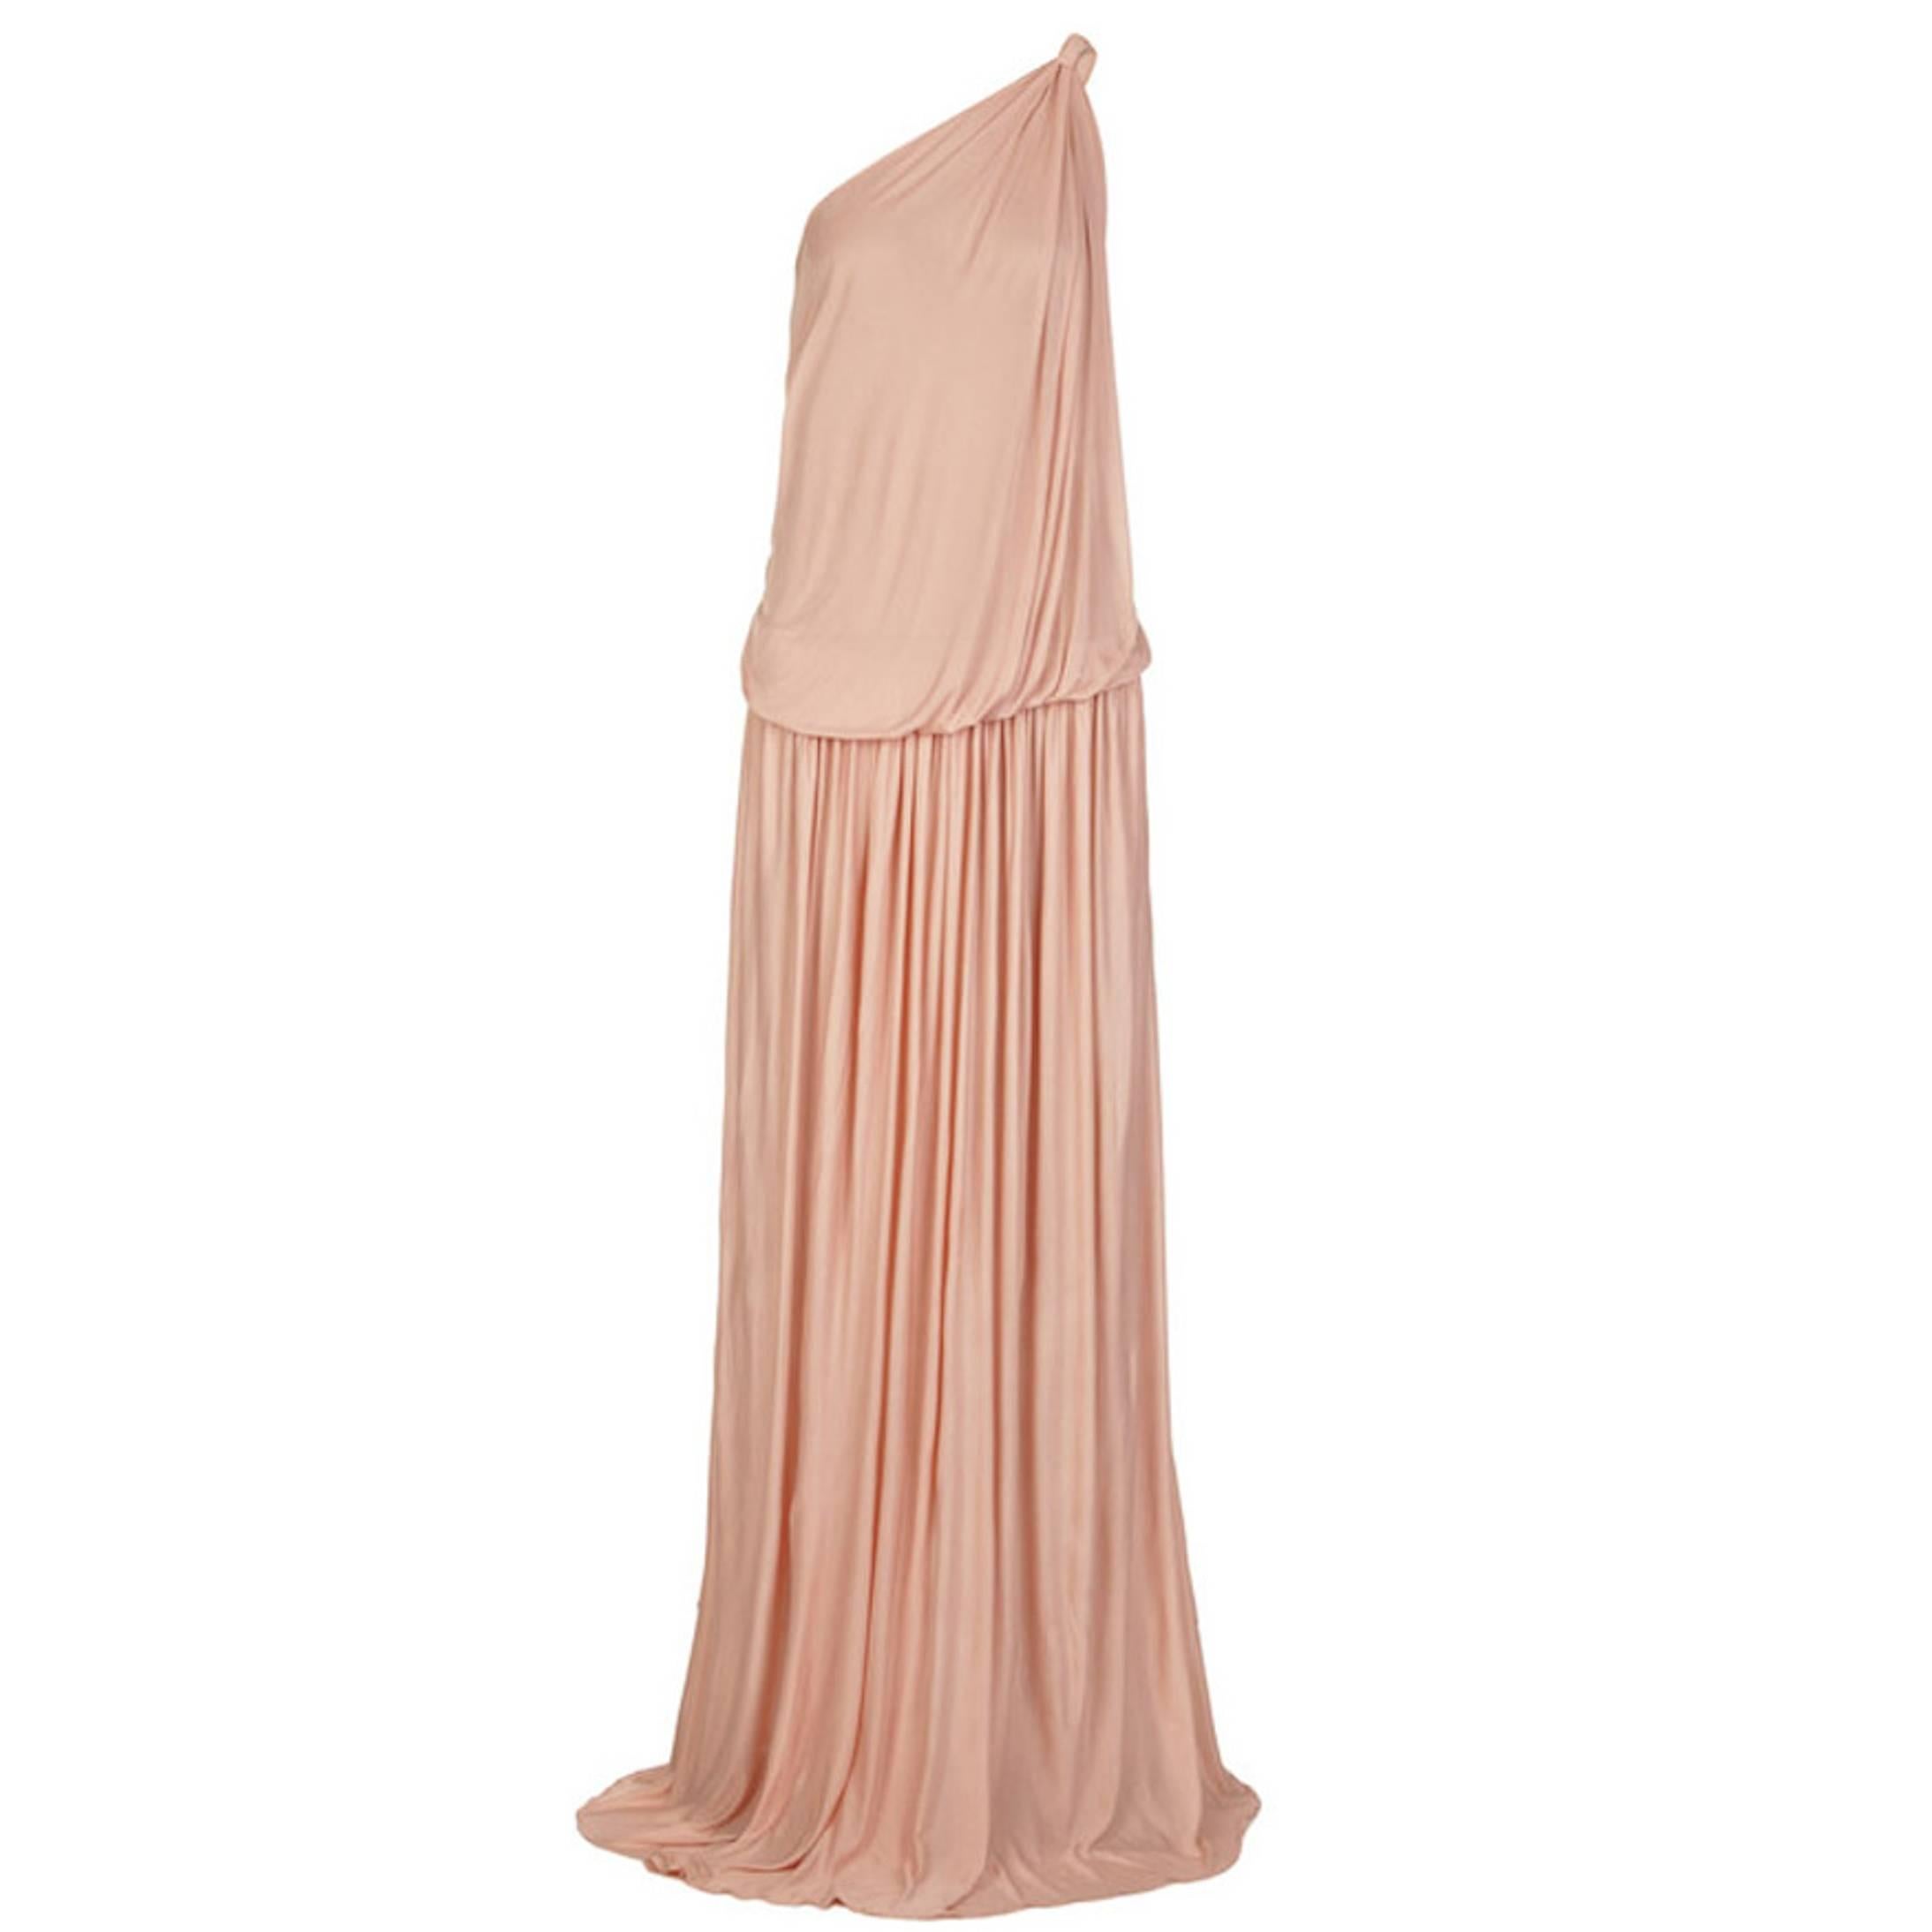 Emilio Pucci Draped Evening Gown Maxi Dress